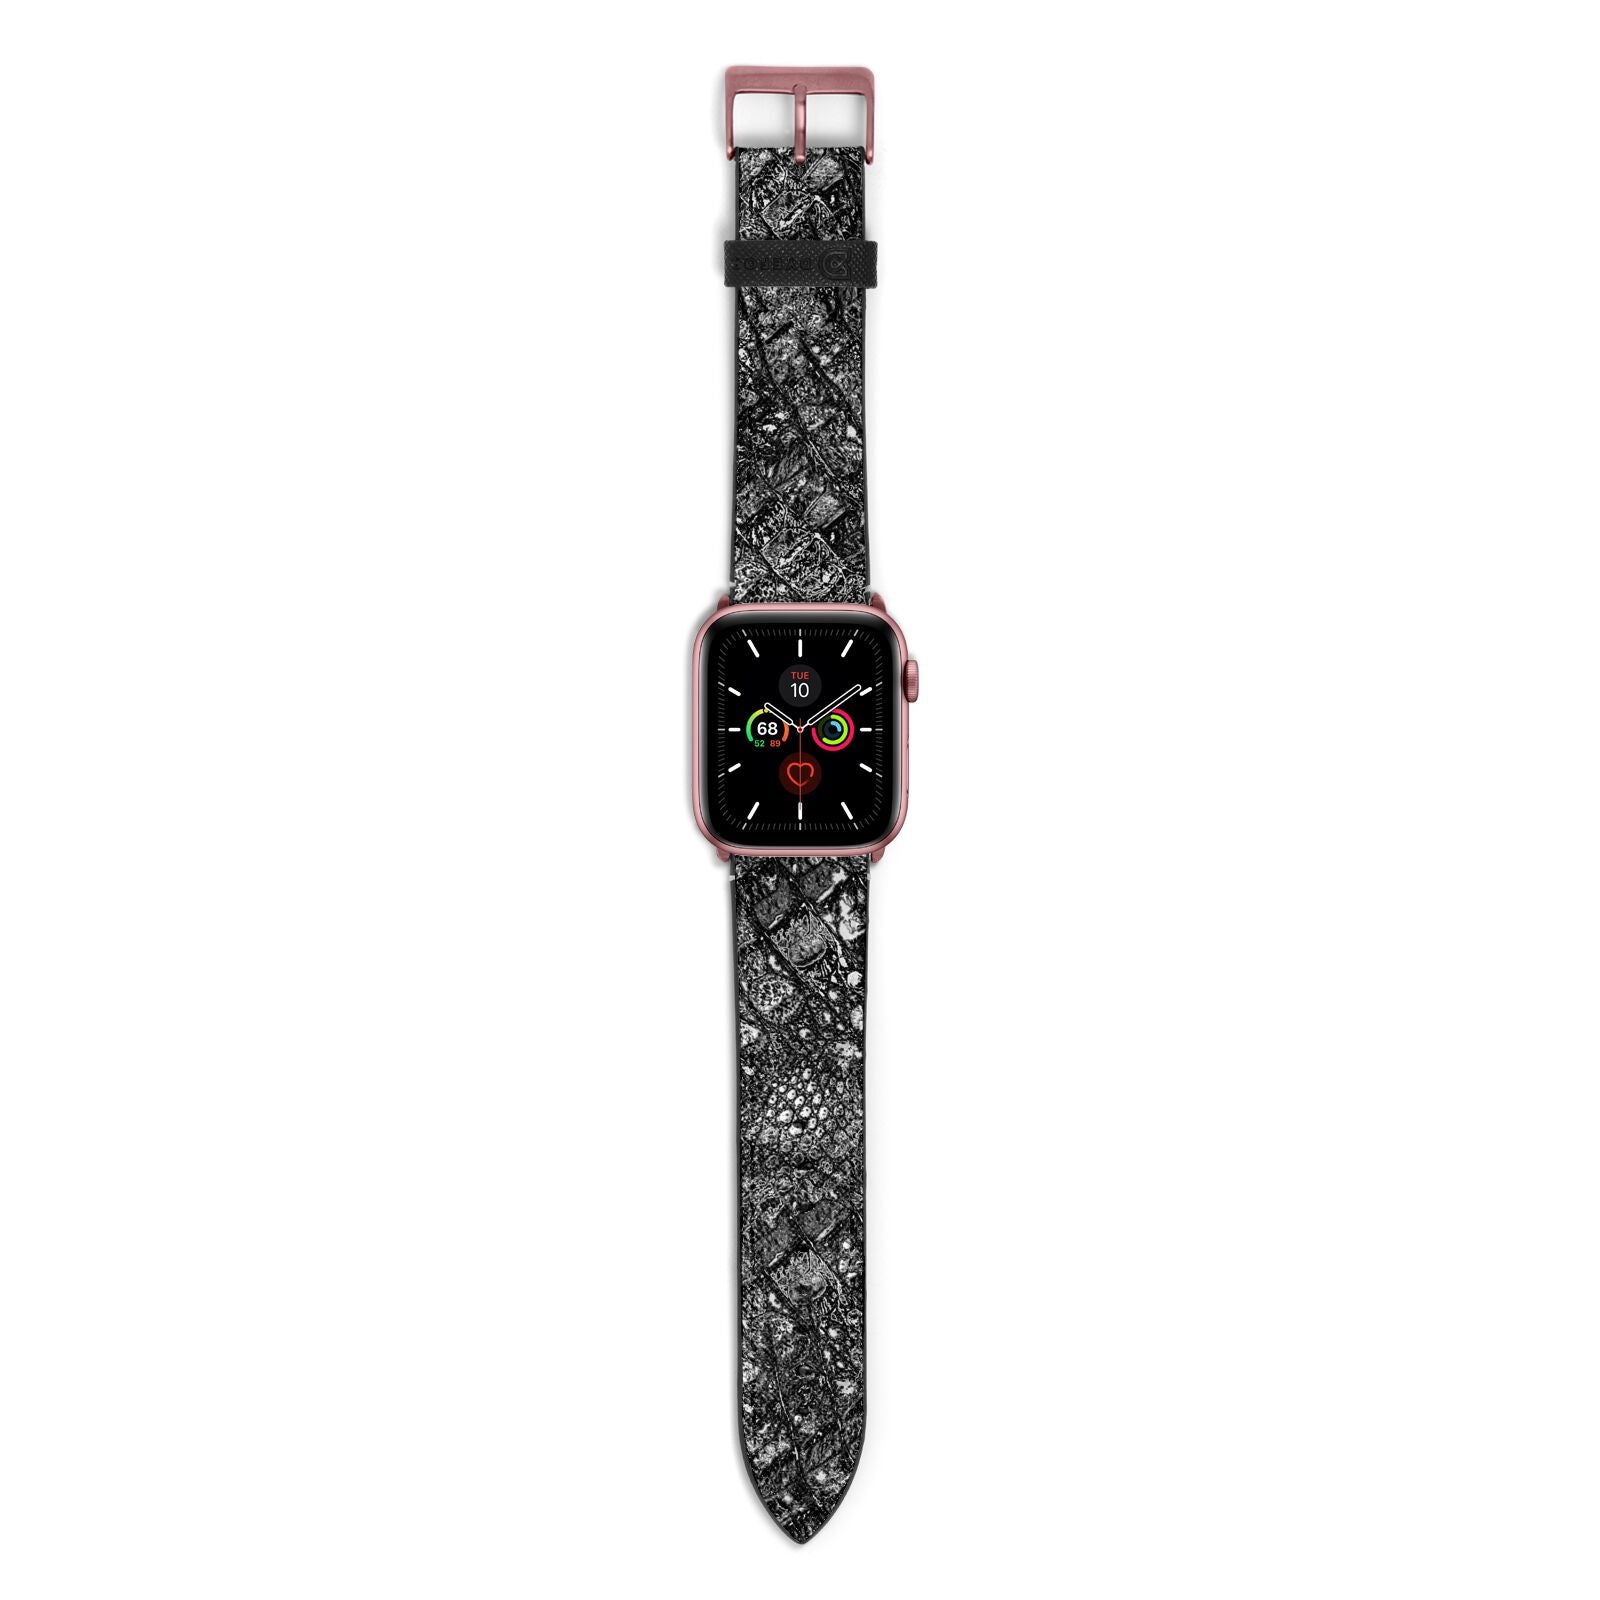 Snakeskin Design Apple Watch Strap with Rose Gold Hardware